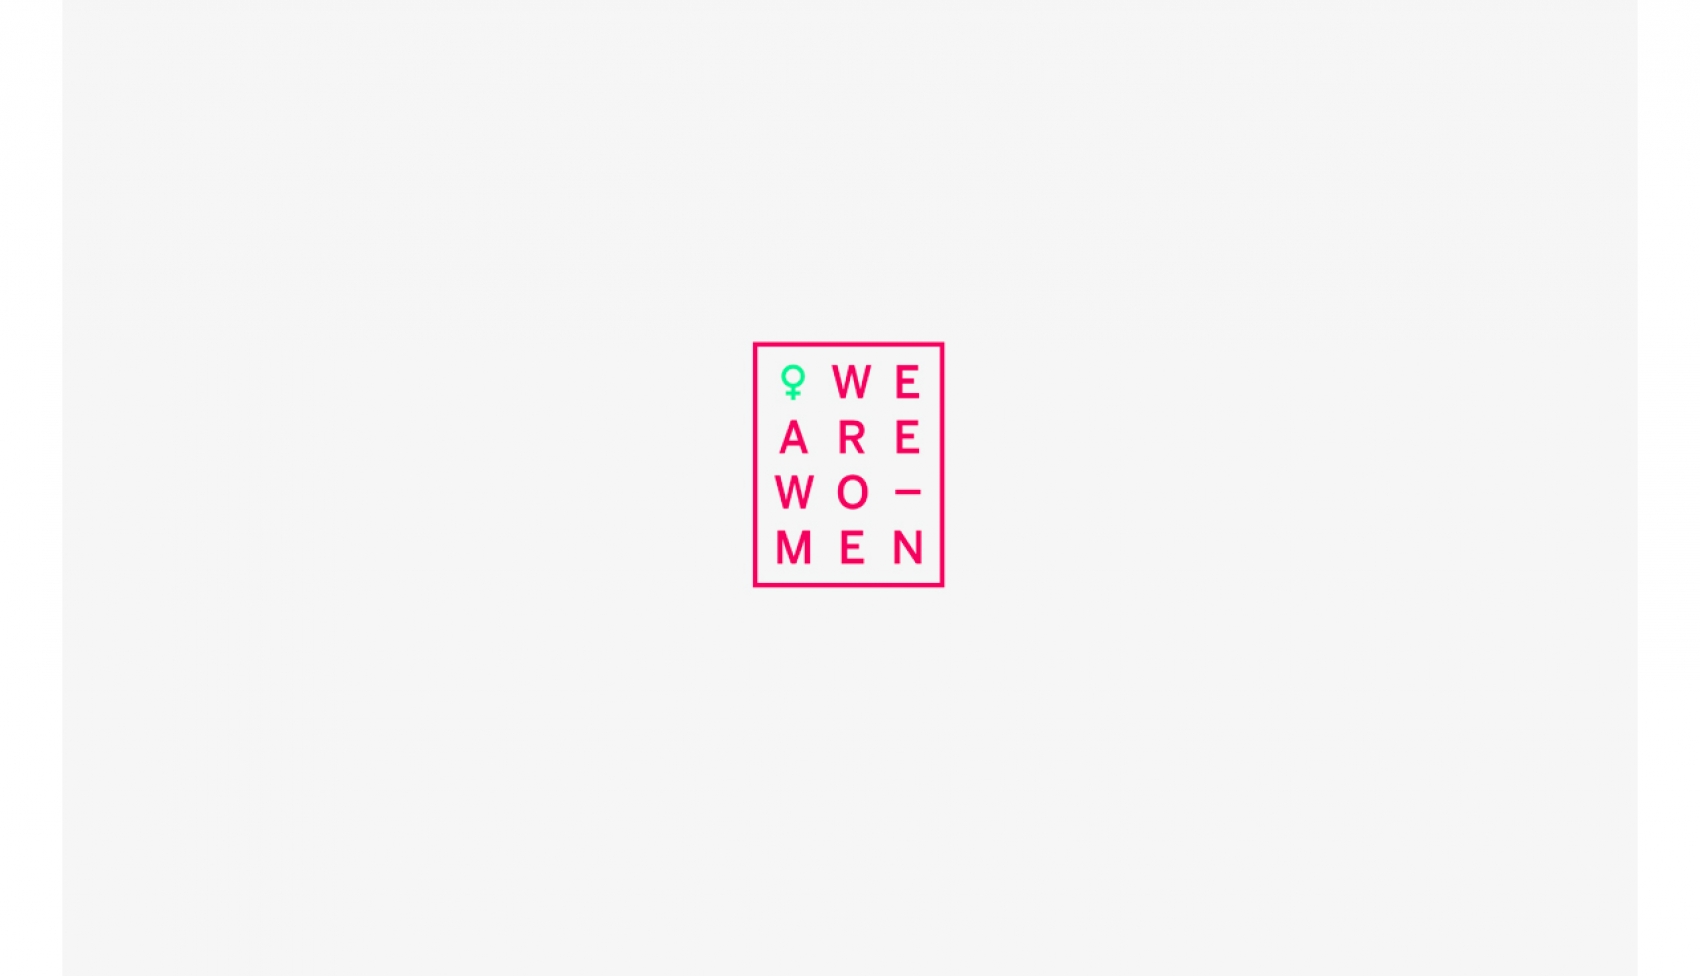 We are Women